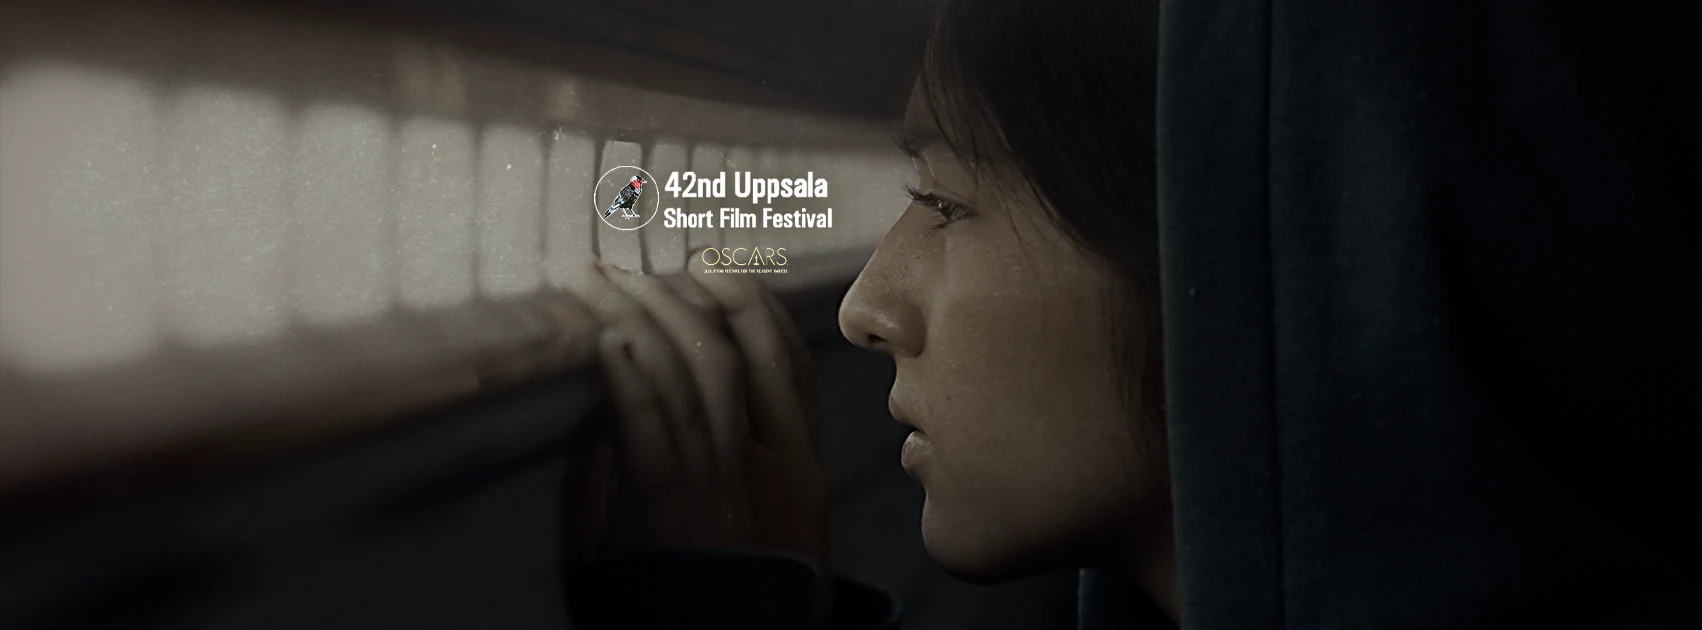 “The thirteenth year” at 42th Uppsala Short Film Festival